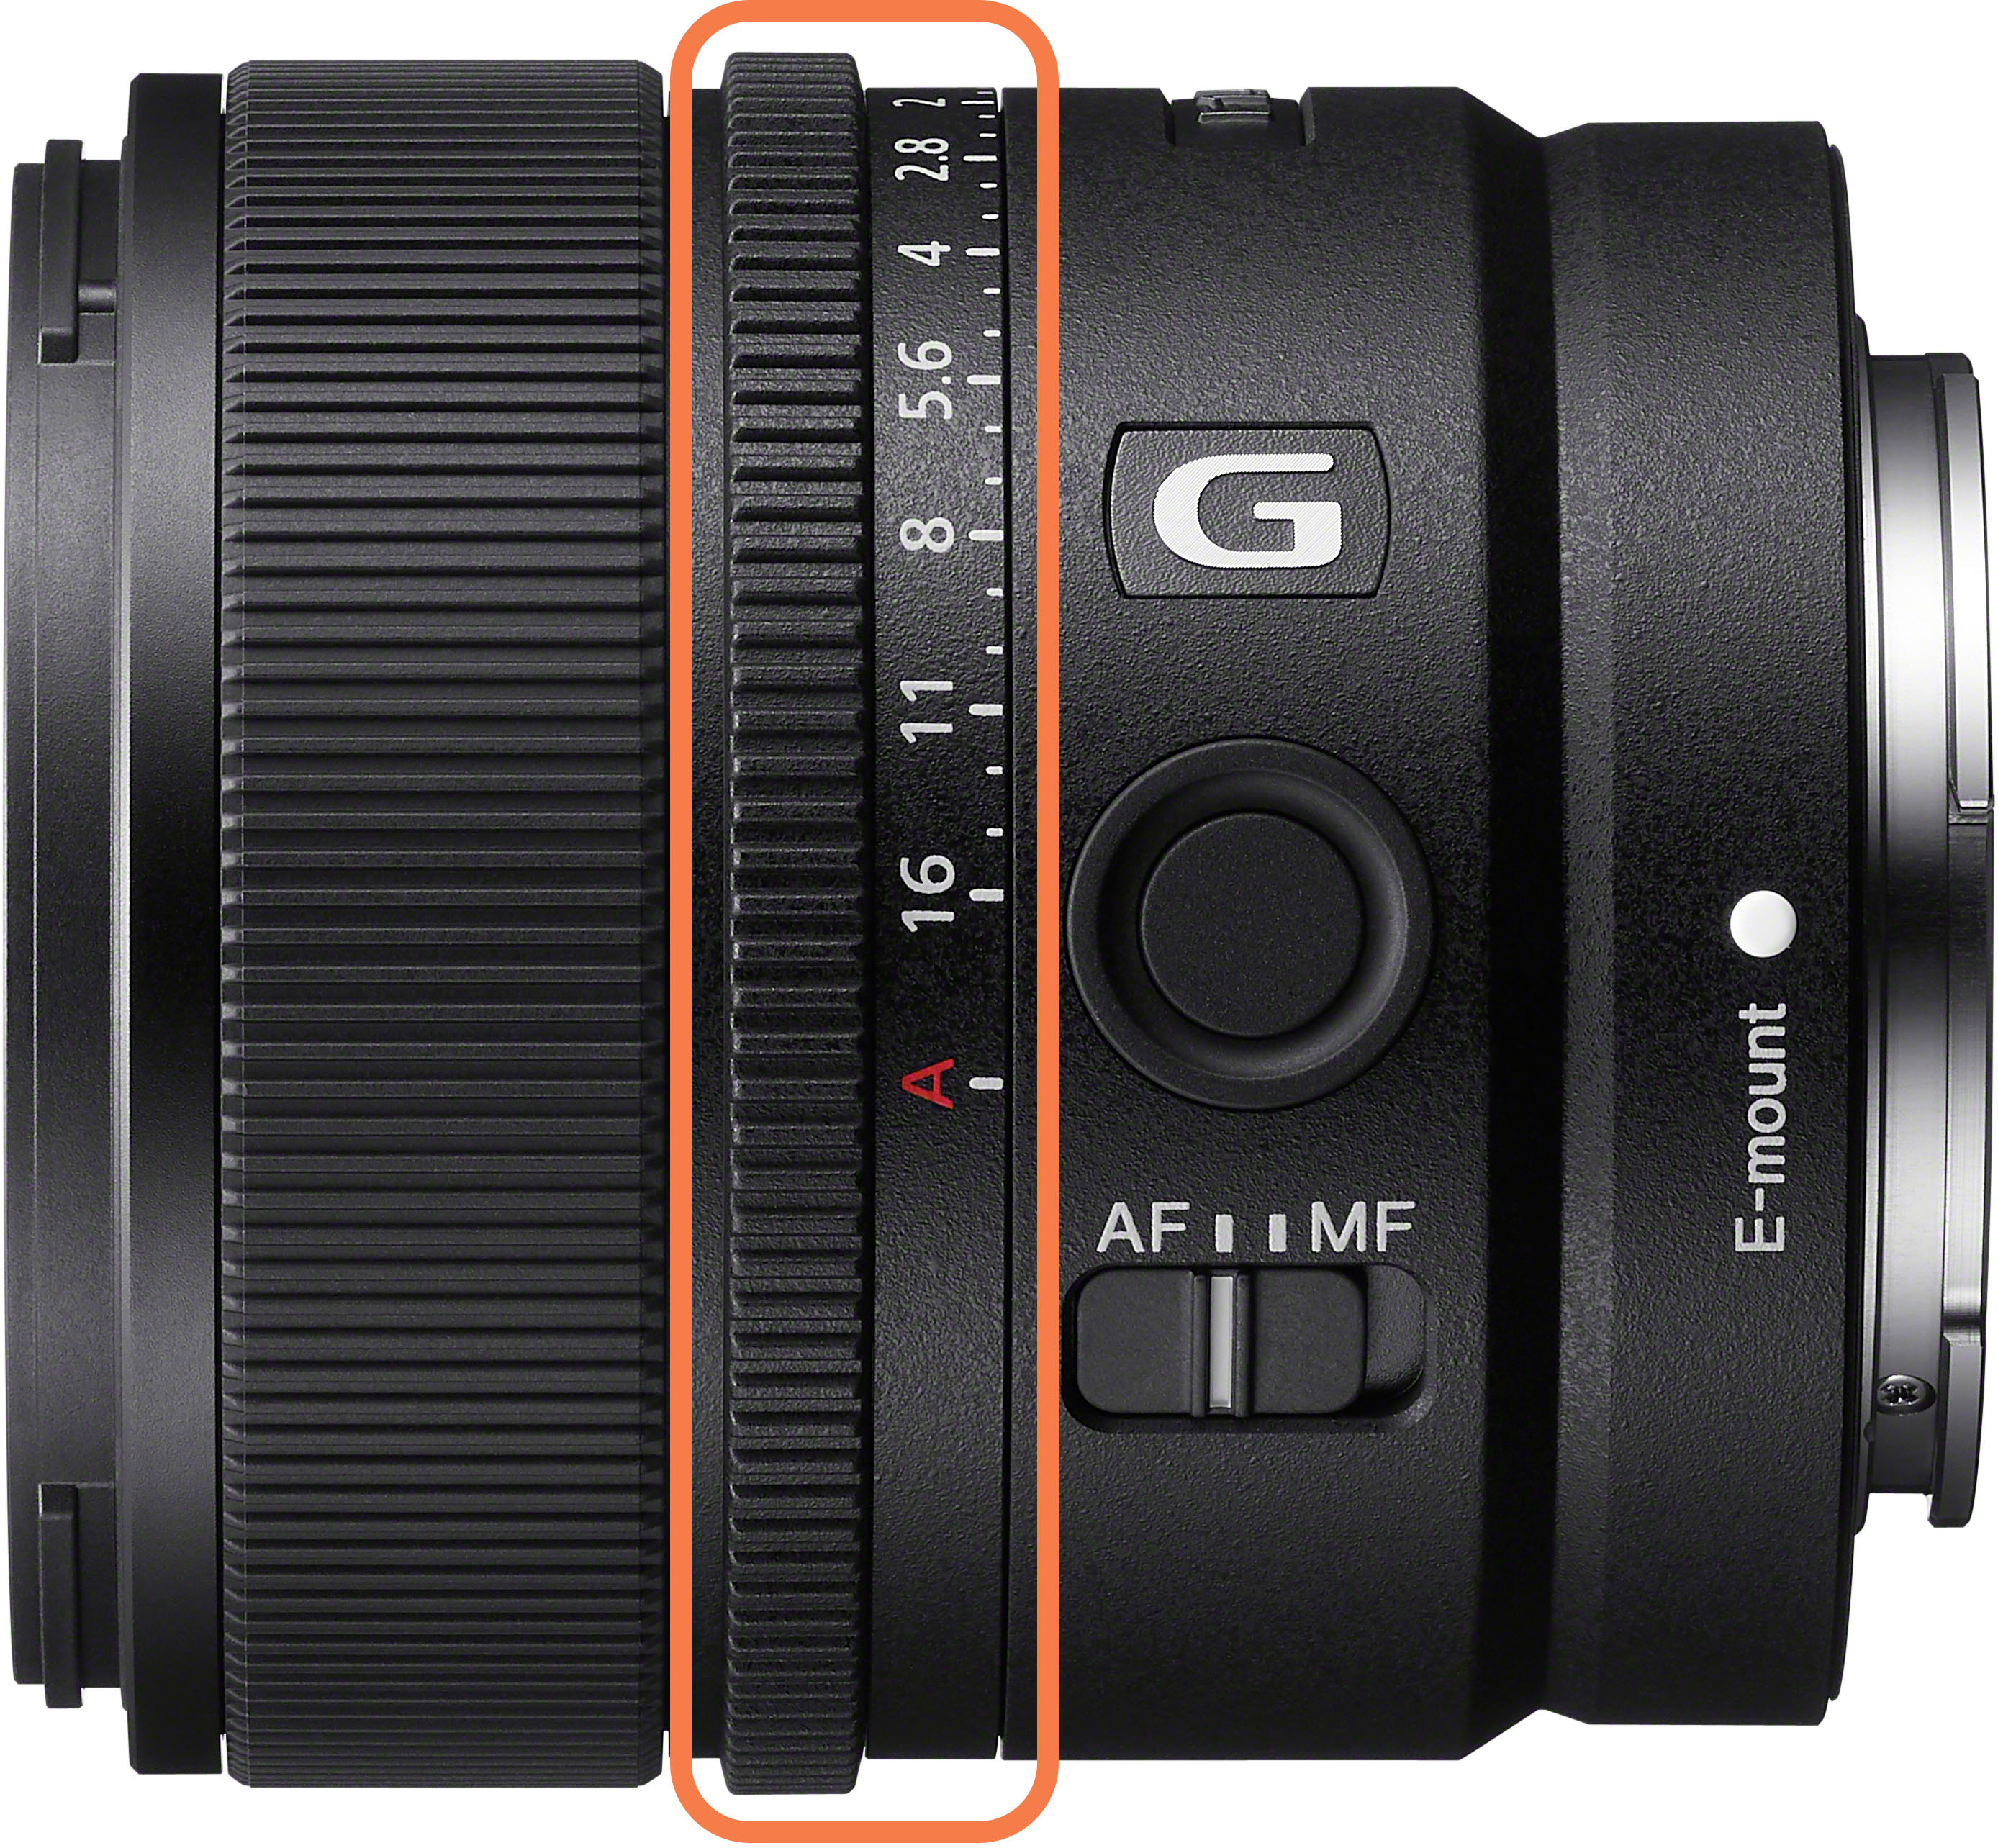 Sony FX30 Camera and Sony FE 14mm F1.8 GM Lens